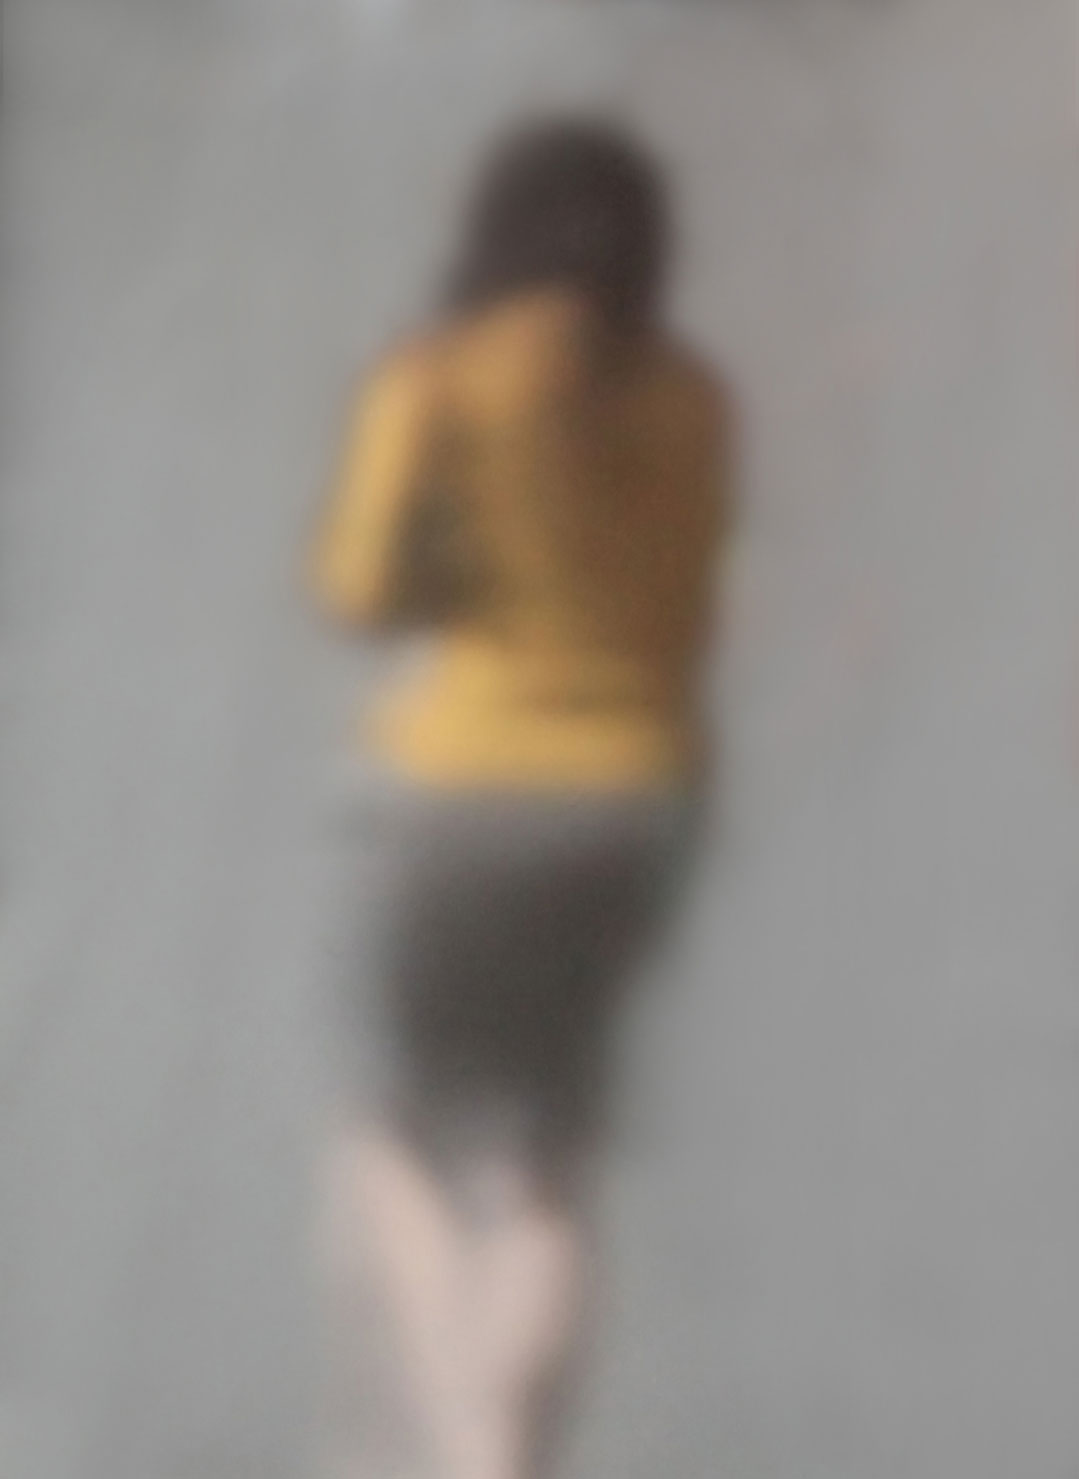 09 „Ocker-Grau“, 2012, New York, Camera Obscura, Pigmentdruck auf Alu-Dibond